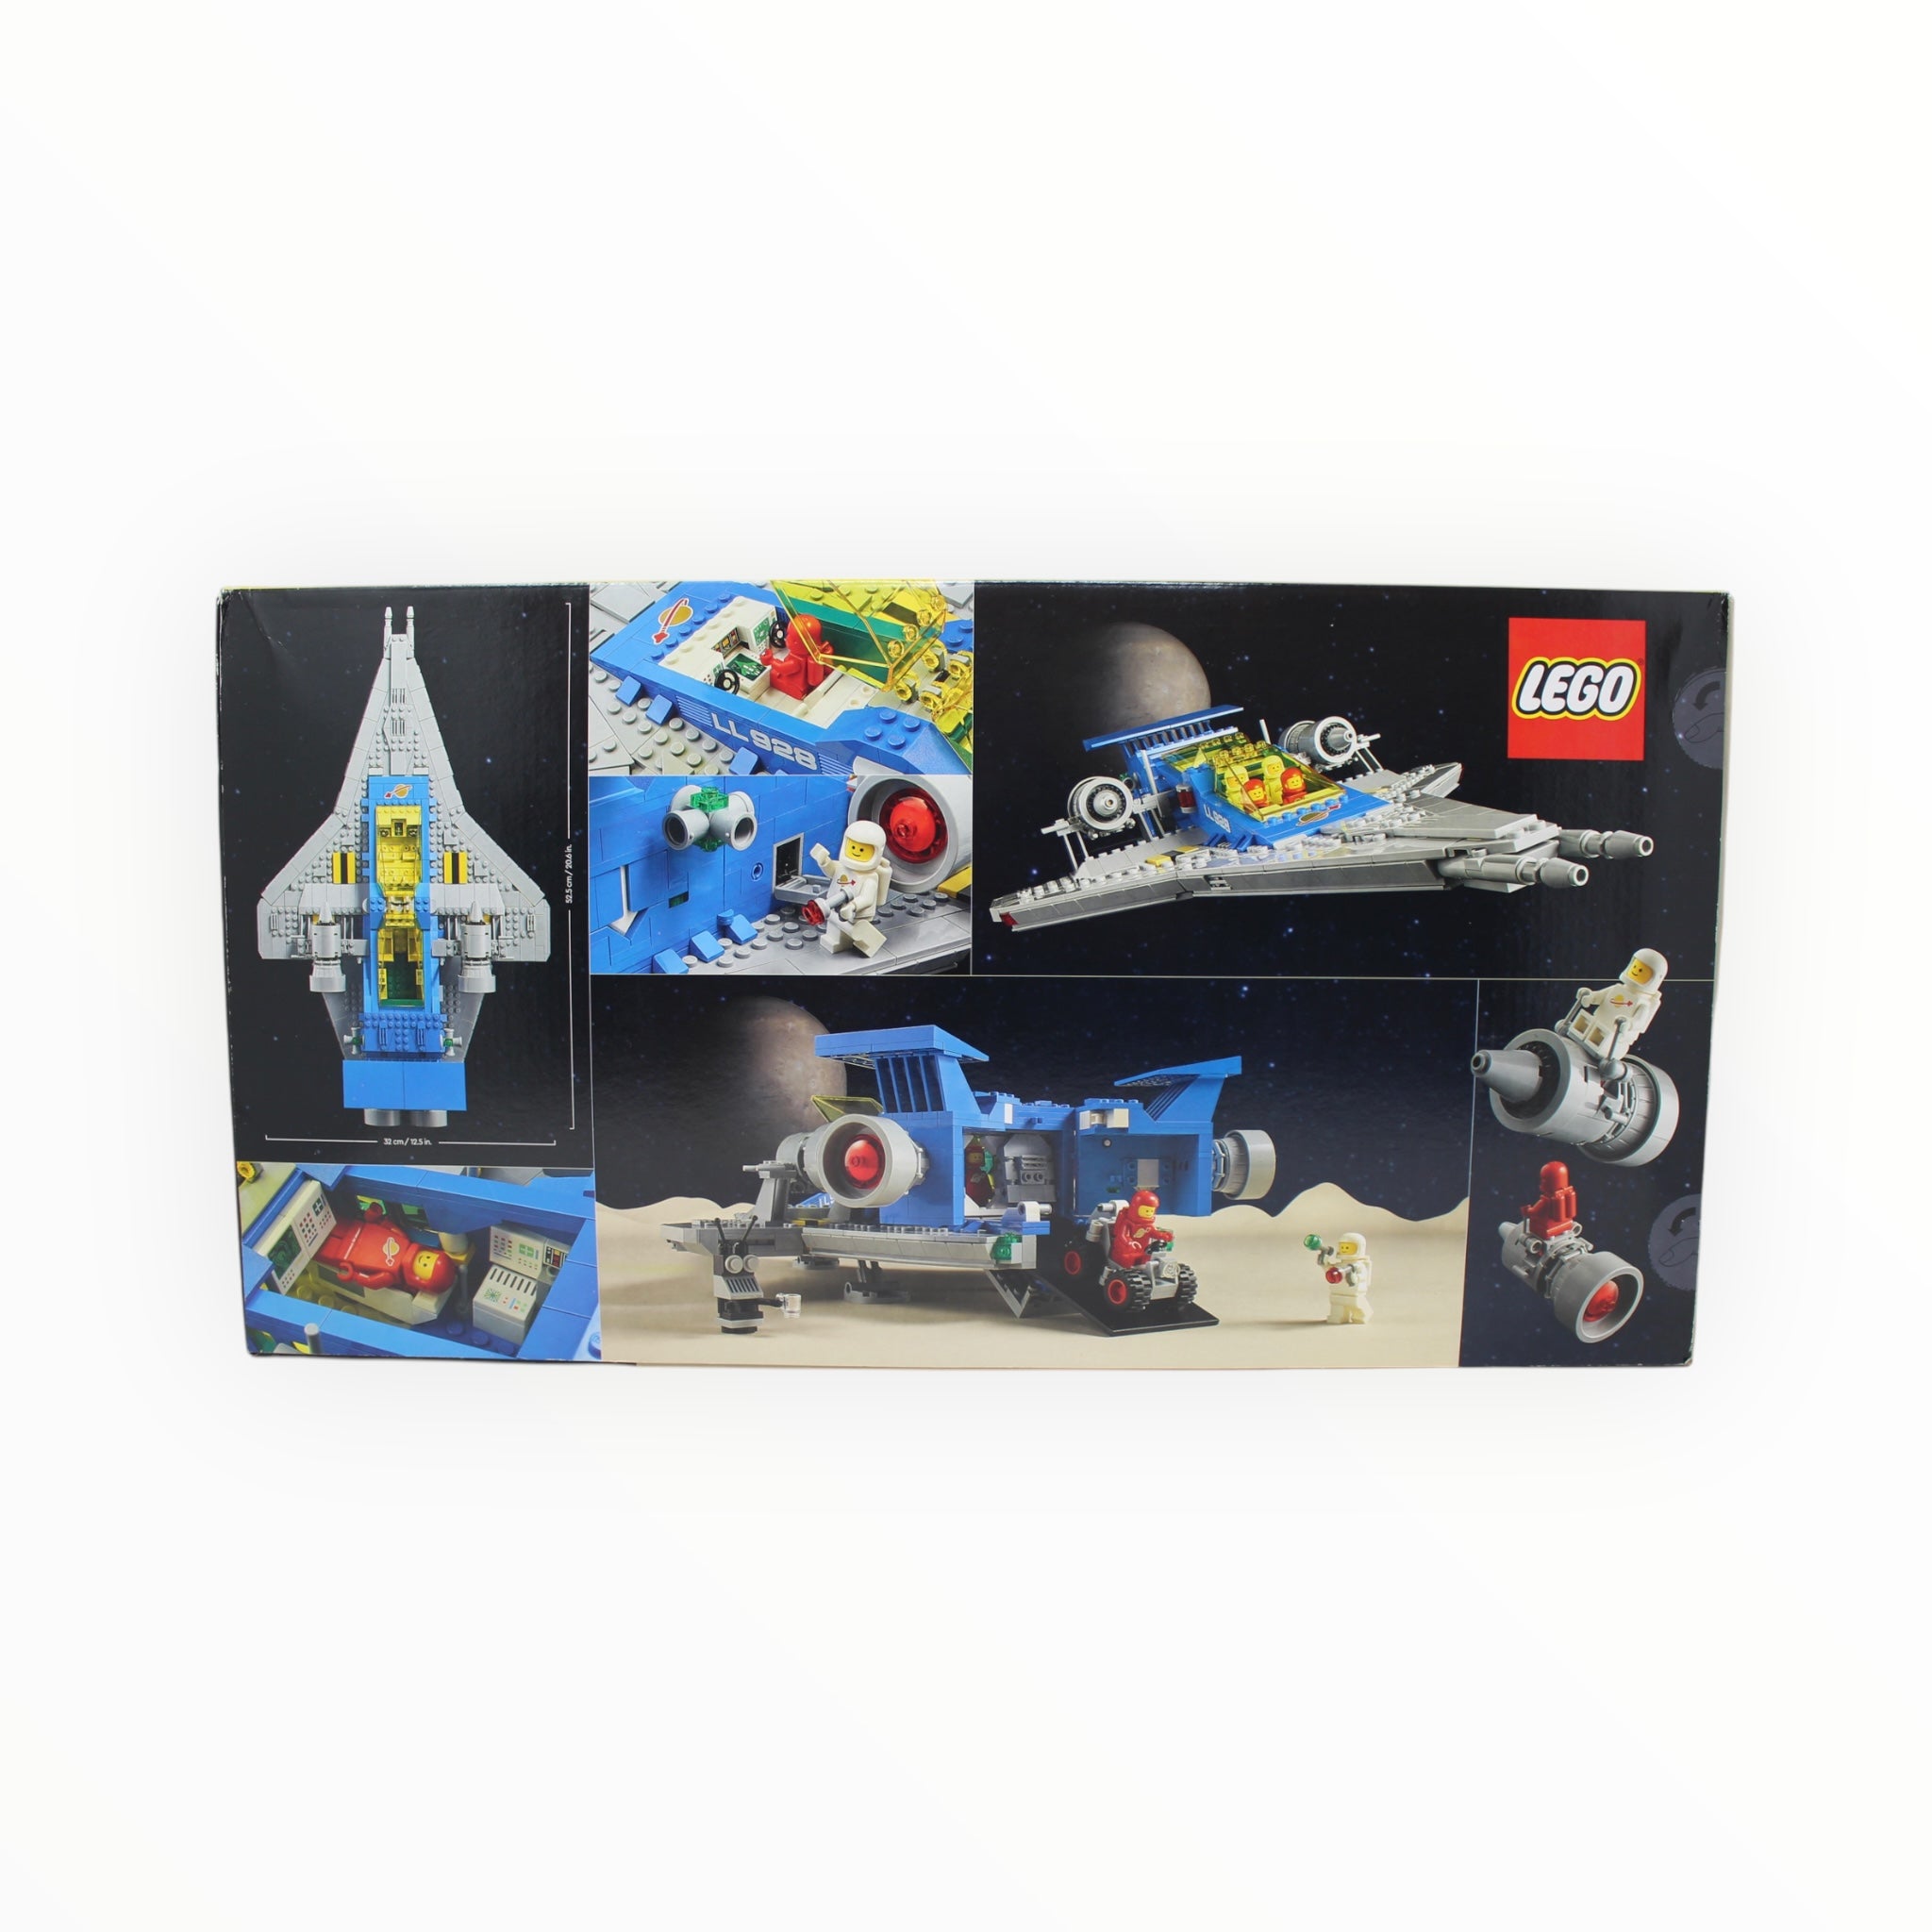 Retired Set 10497 LEGO Galaxy Explorer